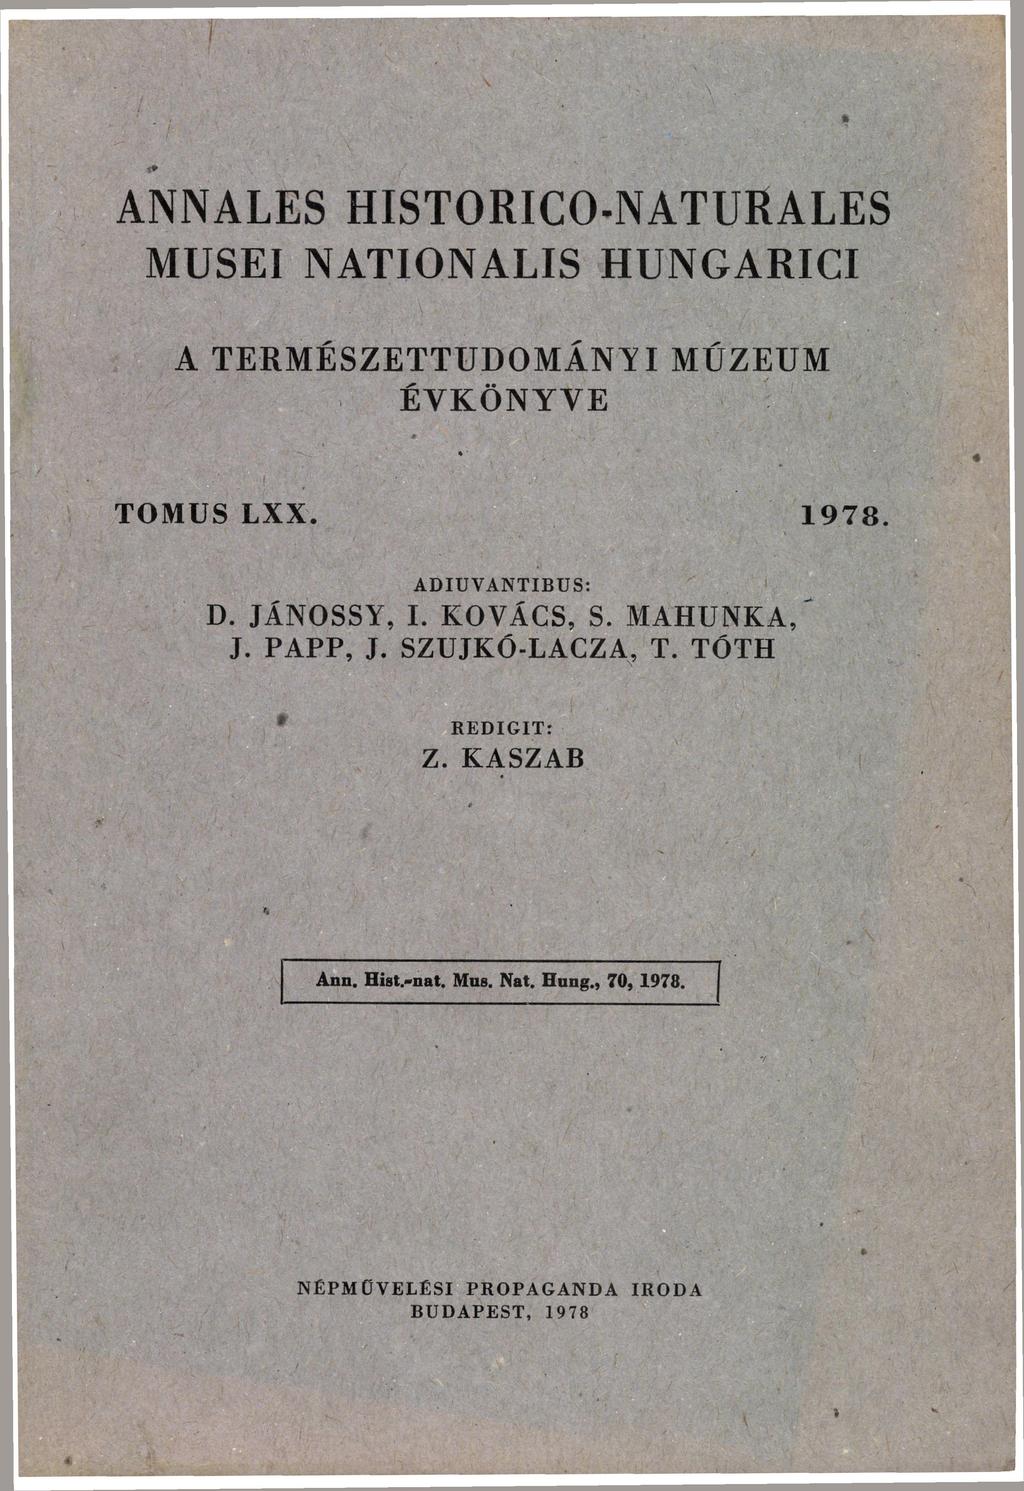 ANNALES HISTORICO-NATURALES MUSEI NATIONALIS HUNGARICI A T E R M É S Z E T T U D O M Á N Y I MÚZEUM ÉVKÖNYVE TOMUS L X X. 1 9 7 8 ADIUVANTIBUS: D.